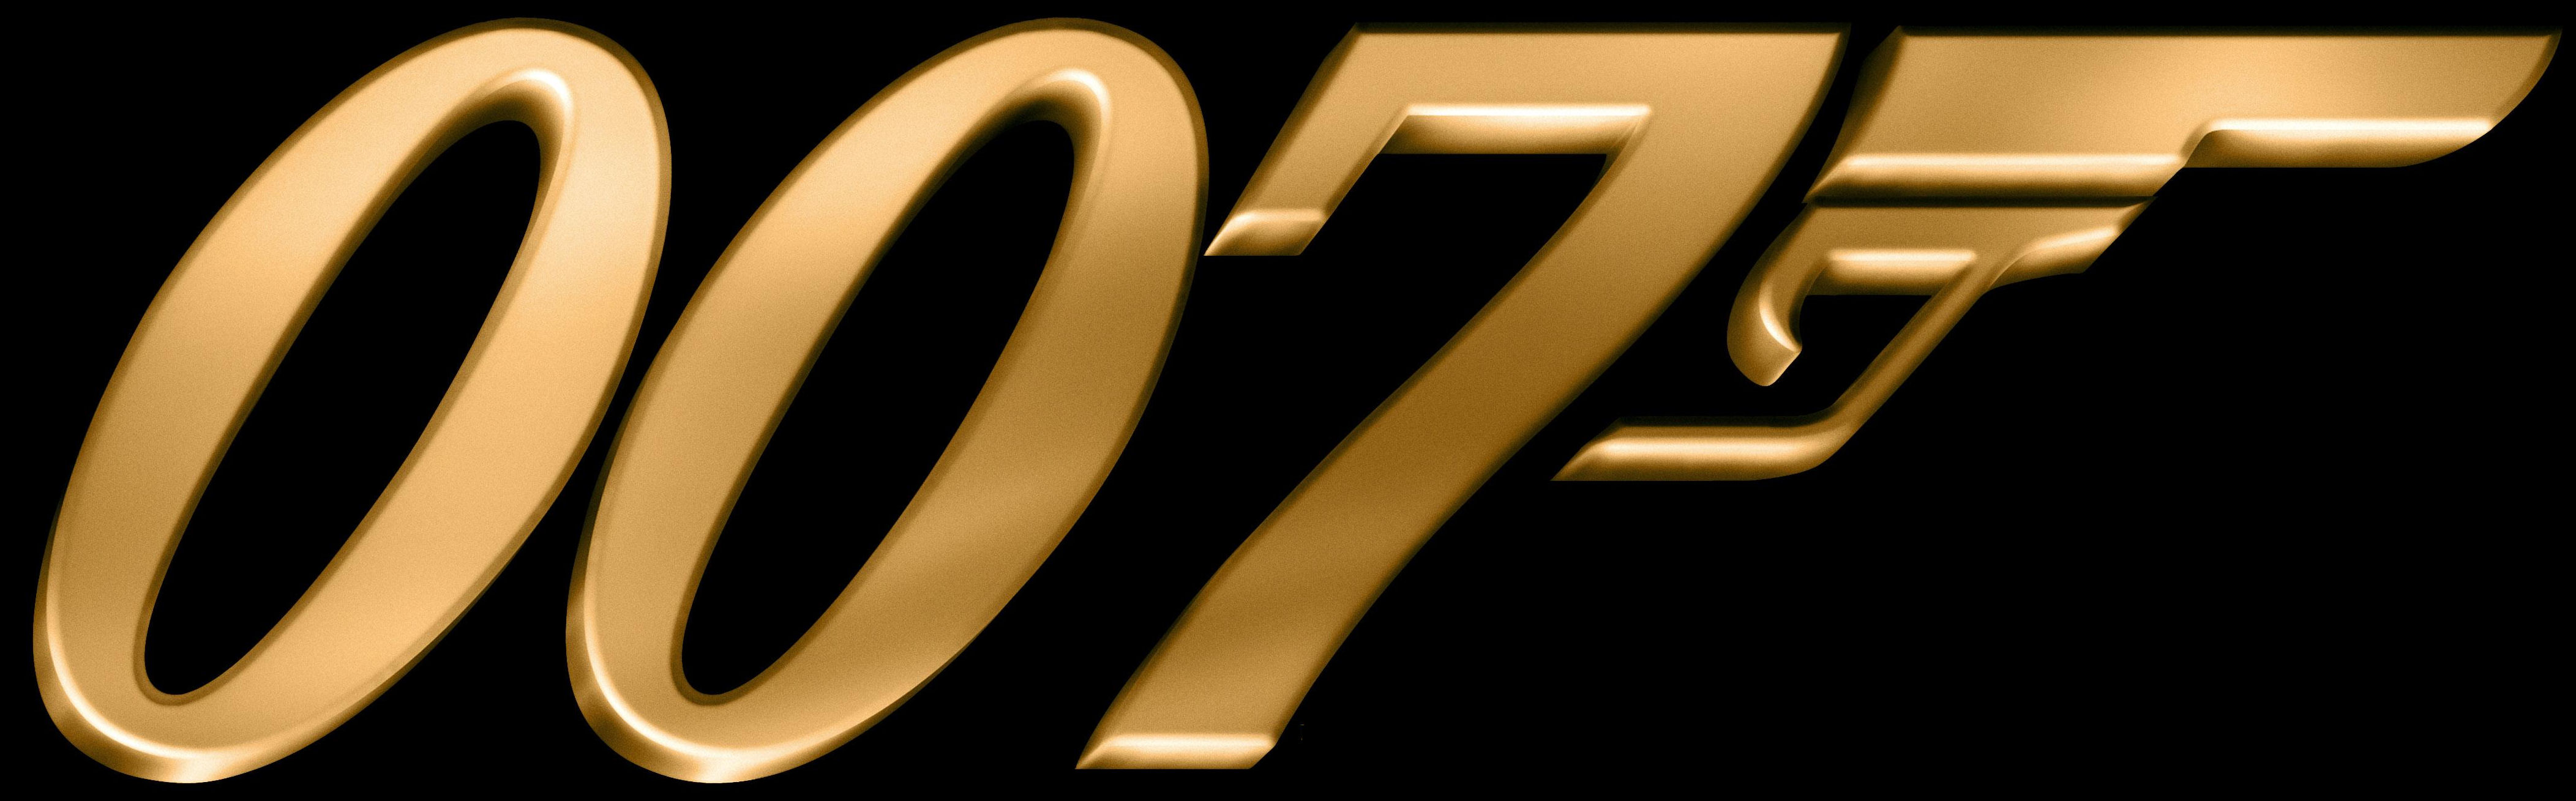 007-logo-gold